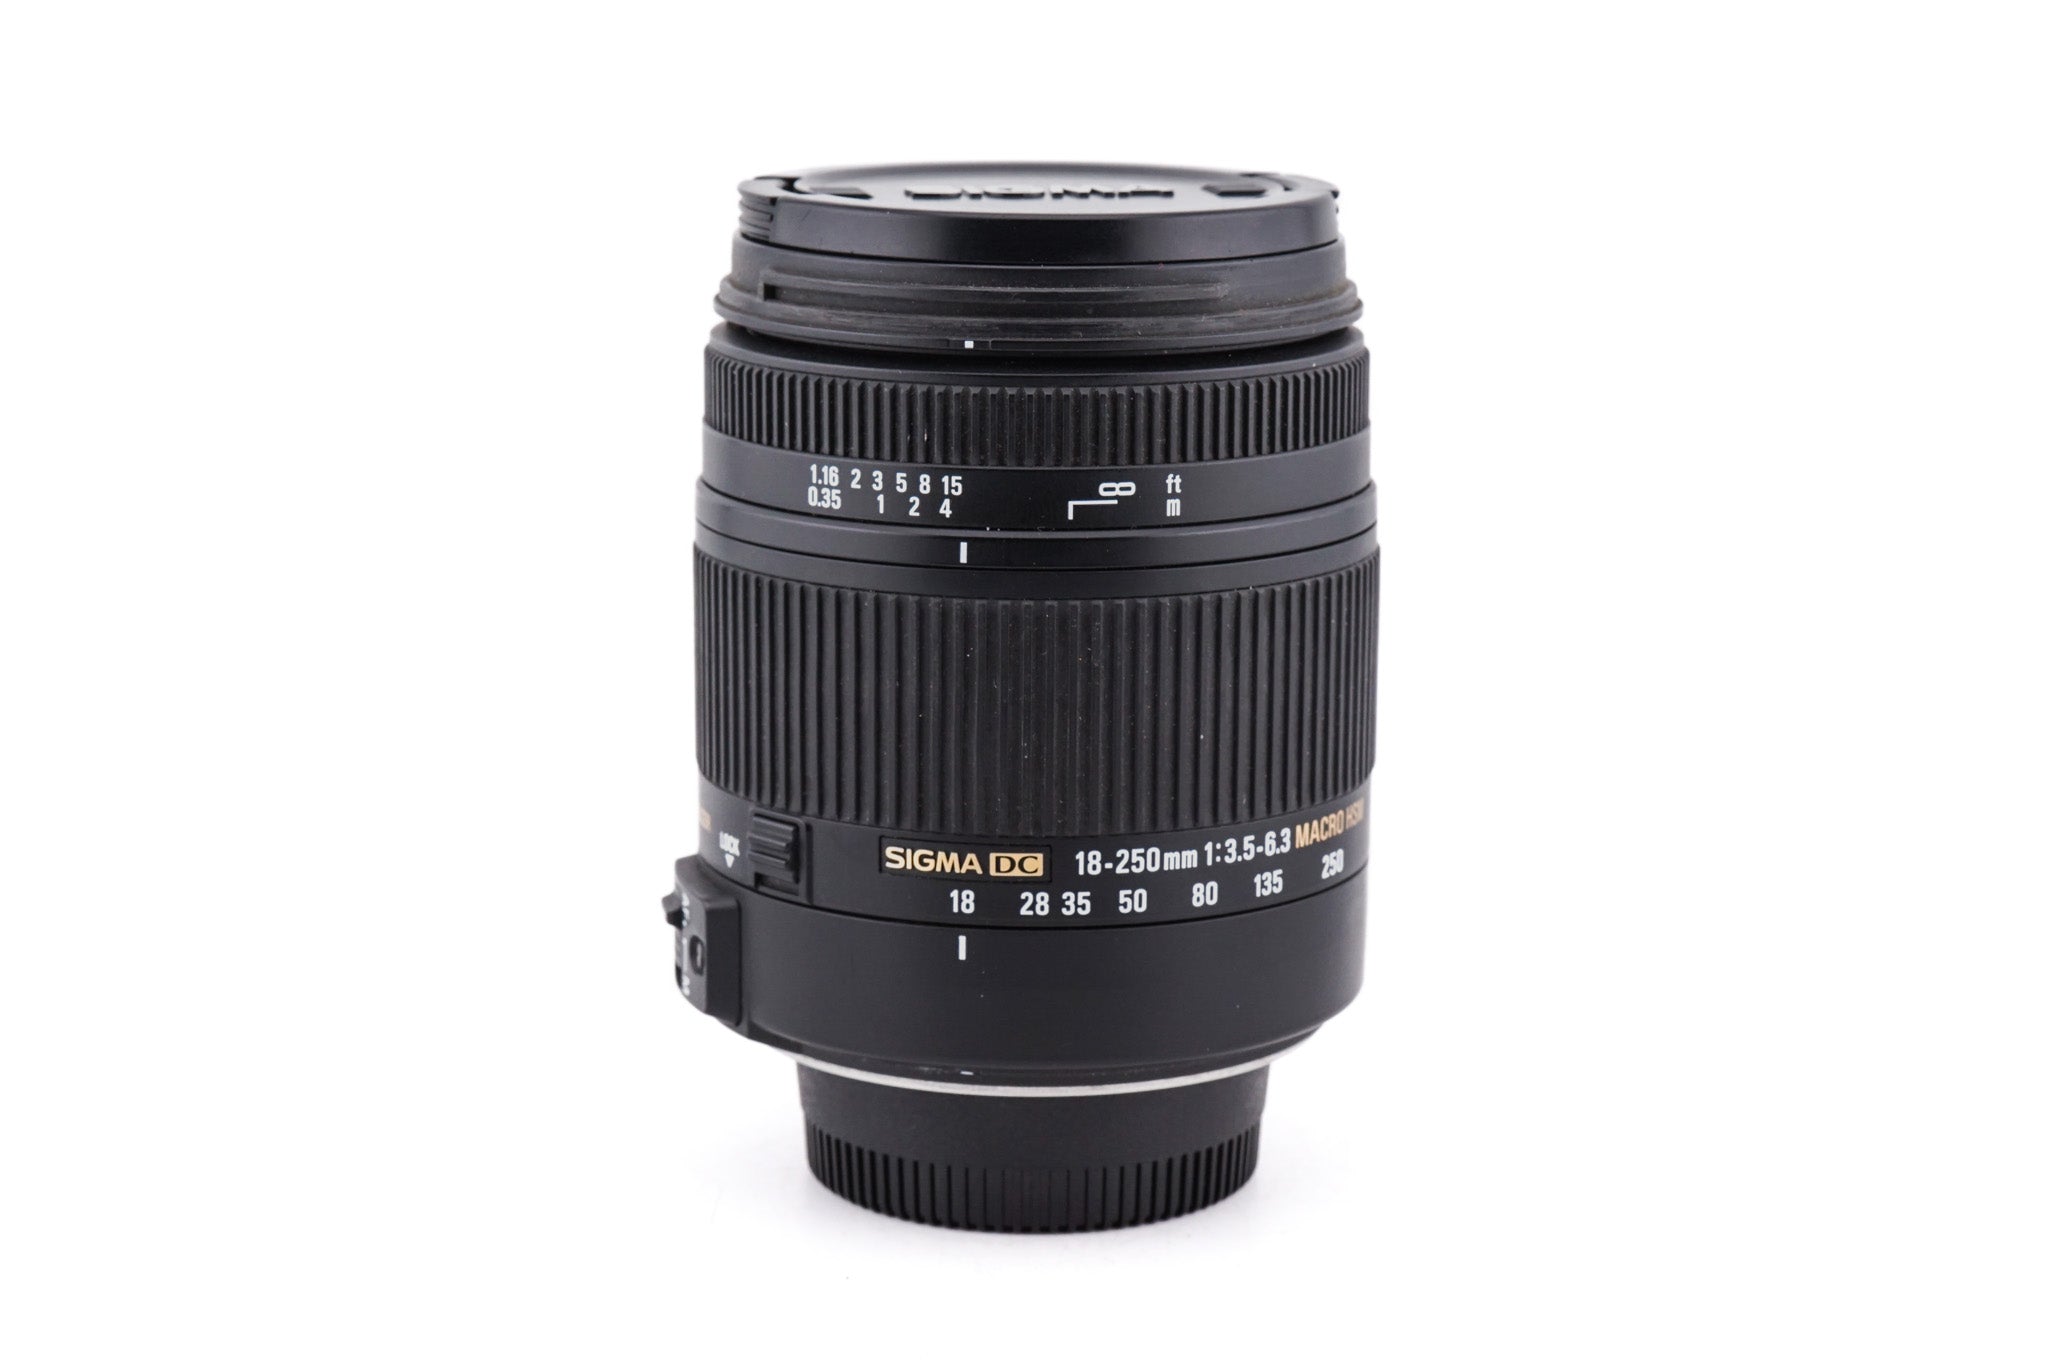 Sigma 18-250mm f3.5-6.3 DC OS Macro HSM - Lens